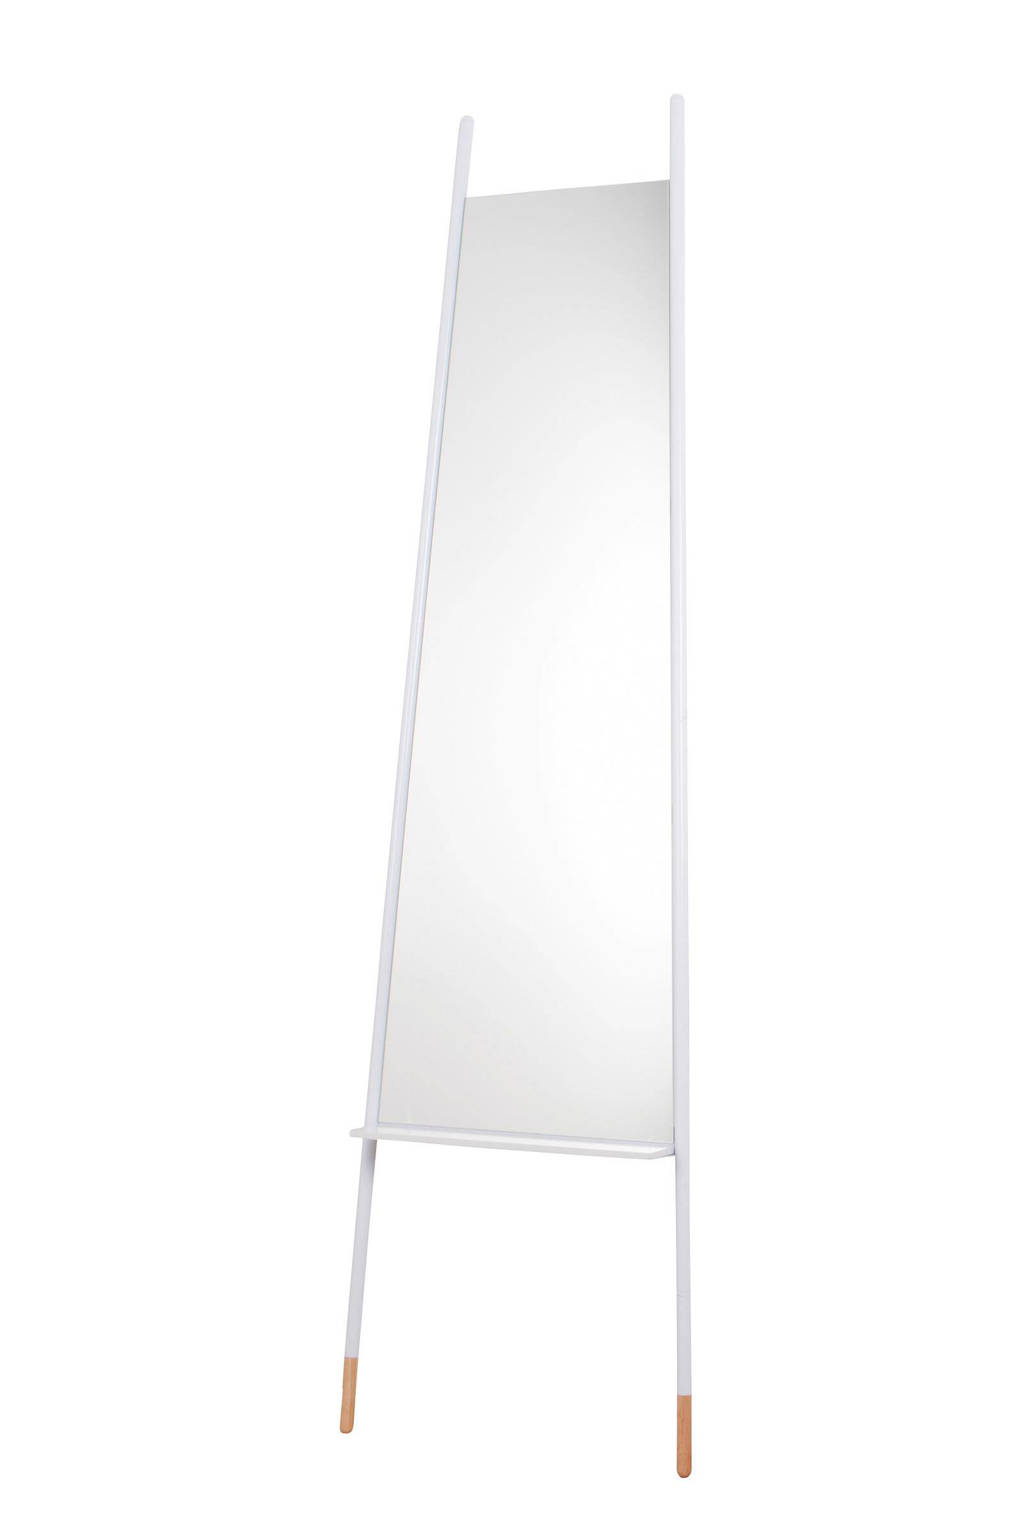 Zuiver Leaning spiegel   (171x31 cm), Wit